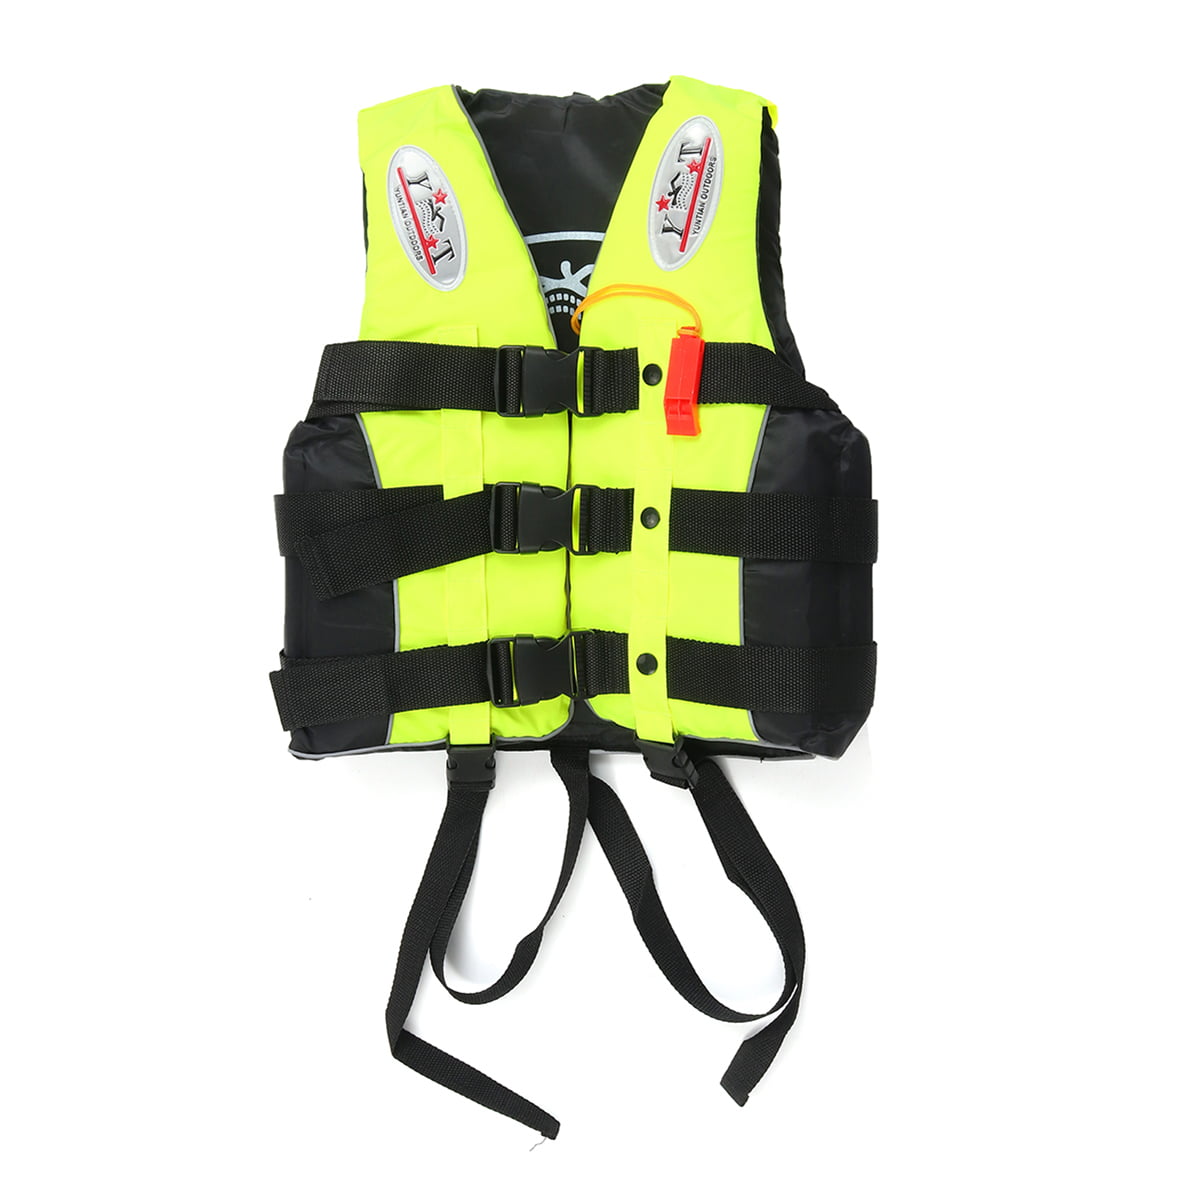 Sports Adult Safety Foam Swimming Buoyancy Aid Kayak Sailing Life Jacket Vest 